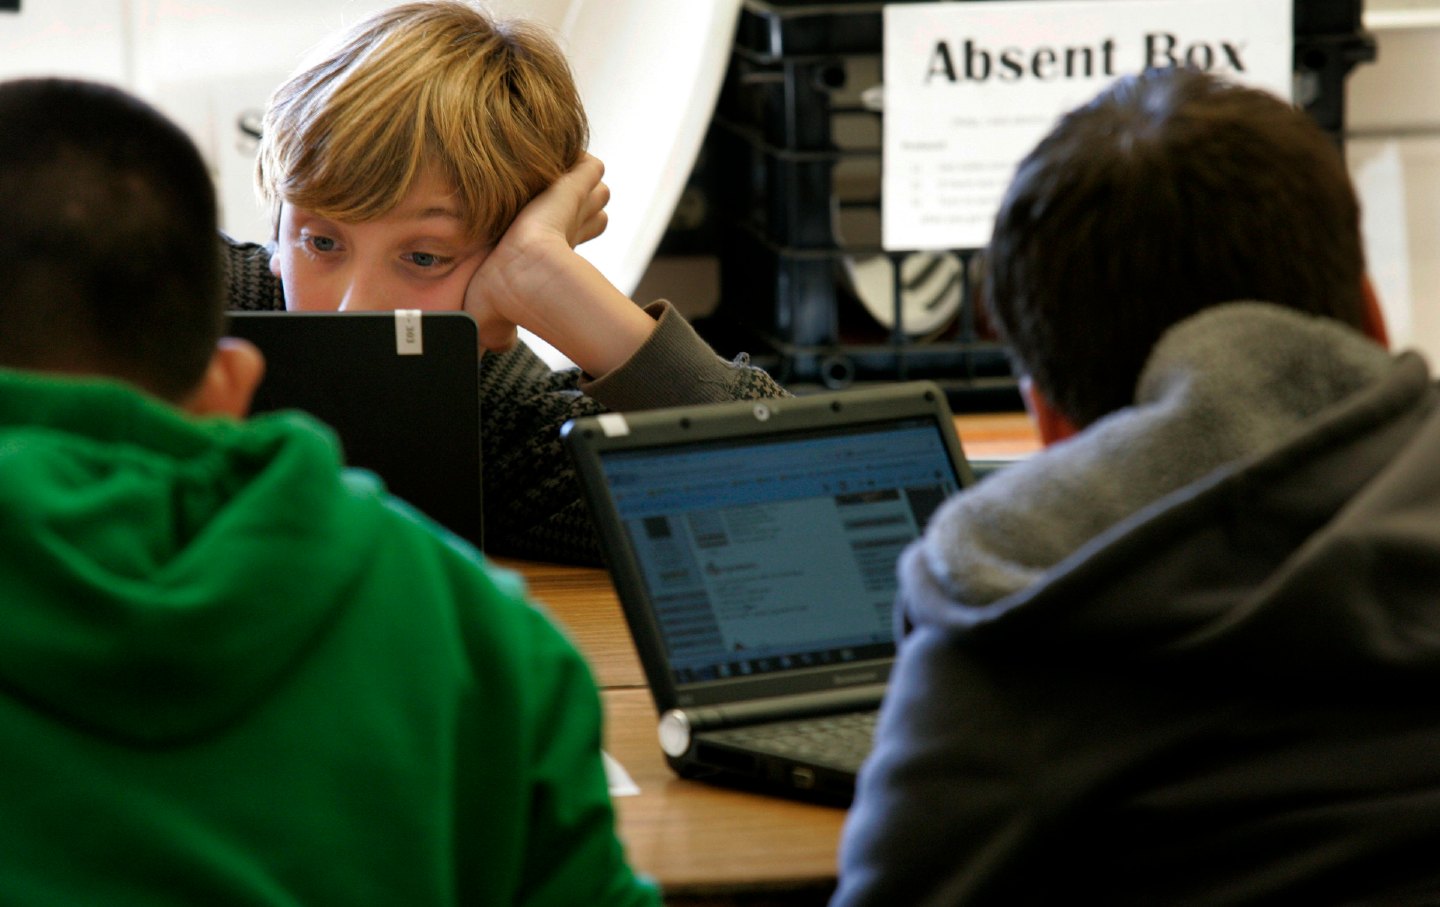 Students on laptops